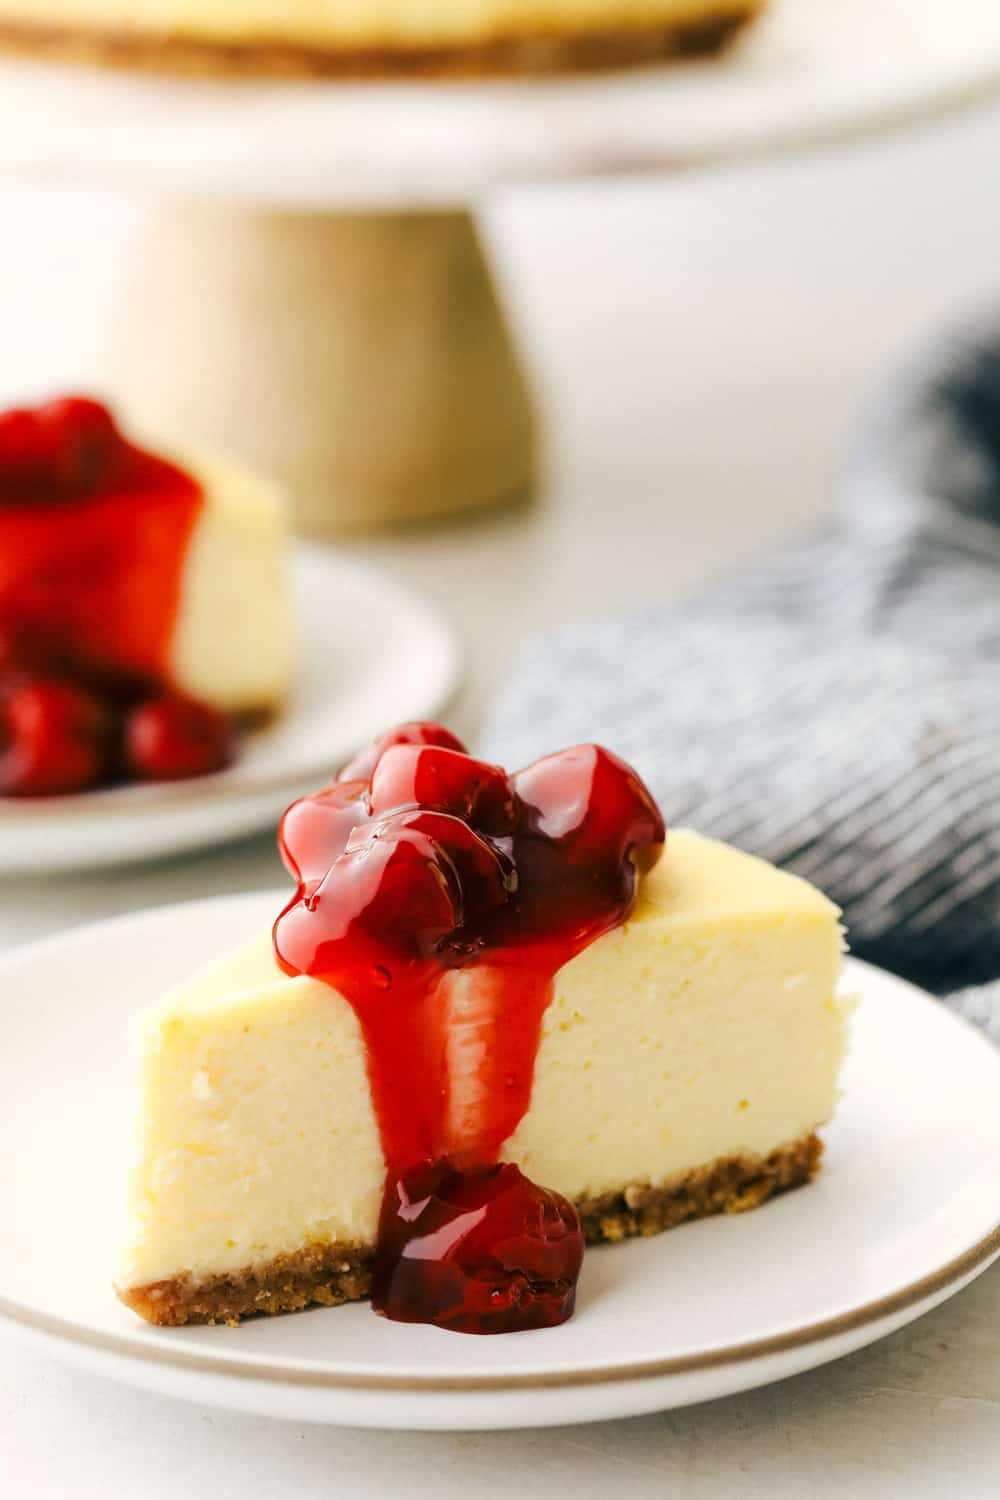 Cheesecake Recipe - Make the creamiest cheesecake ever! - VIDEO